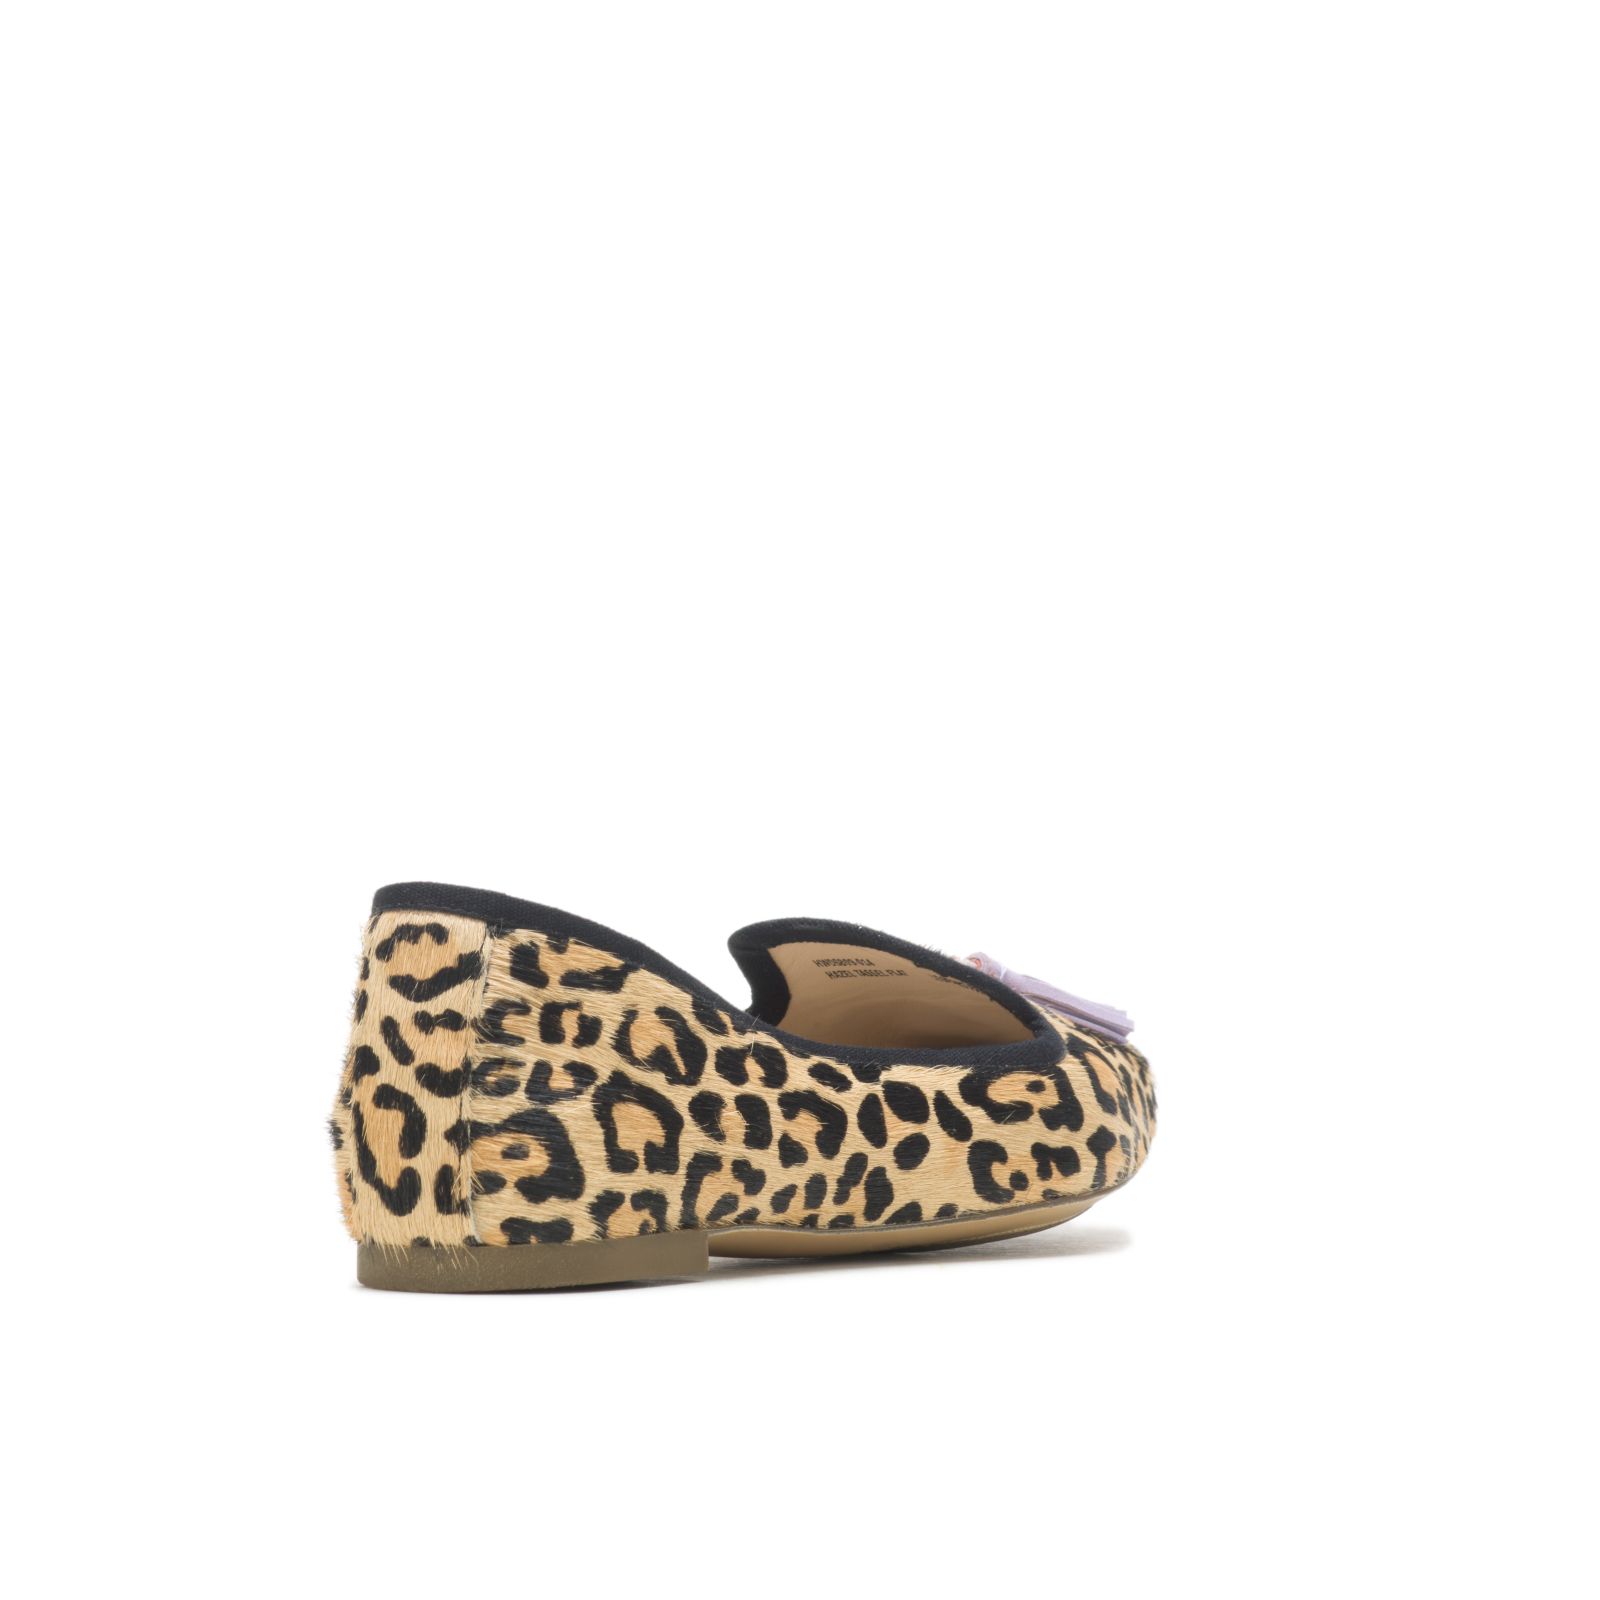 Loafers Hush Puppies Sadie Tassel 2 Mujer Leopardo | OTFANRE-36